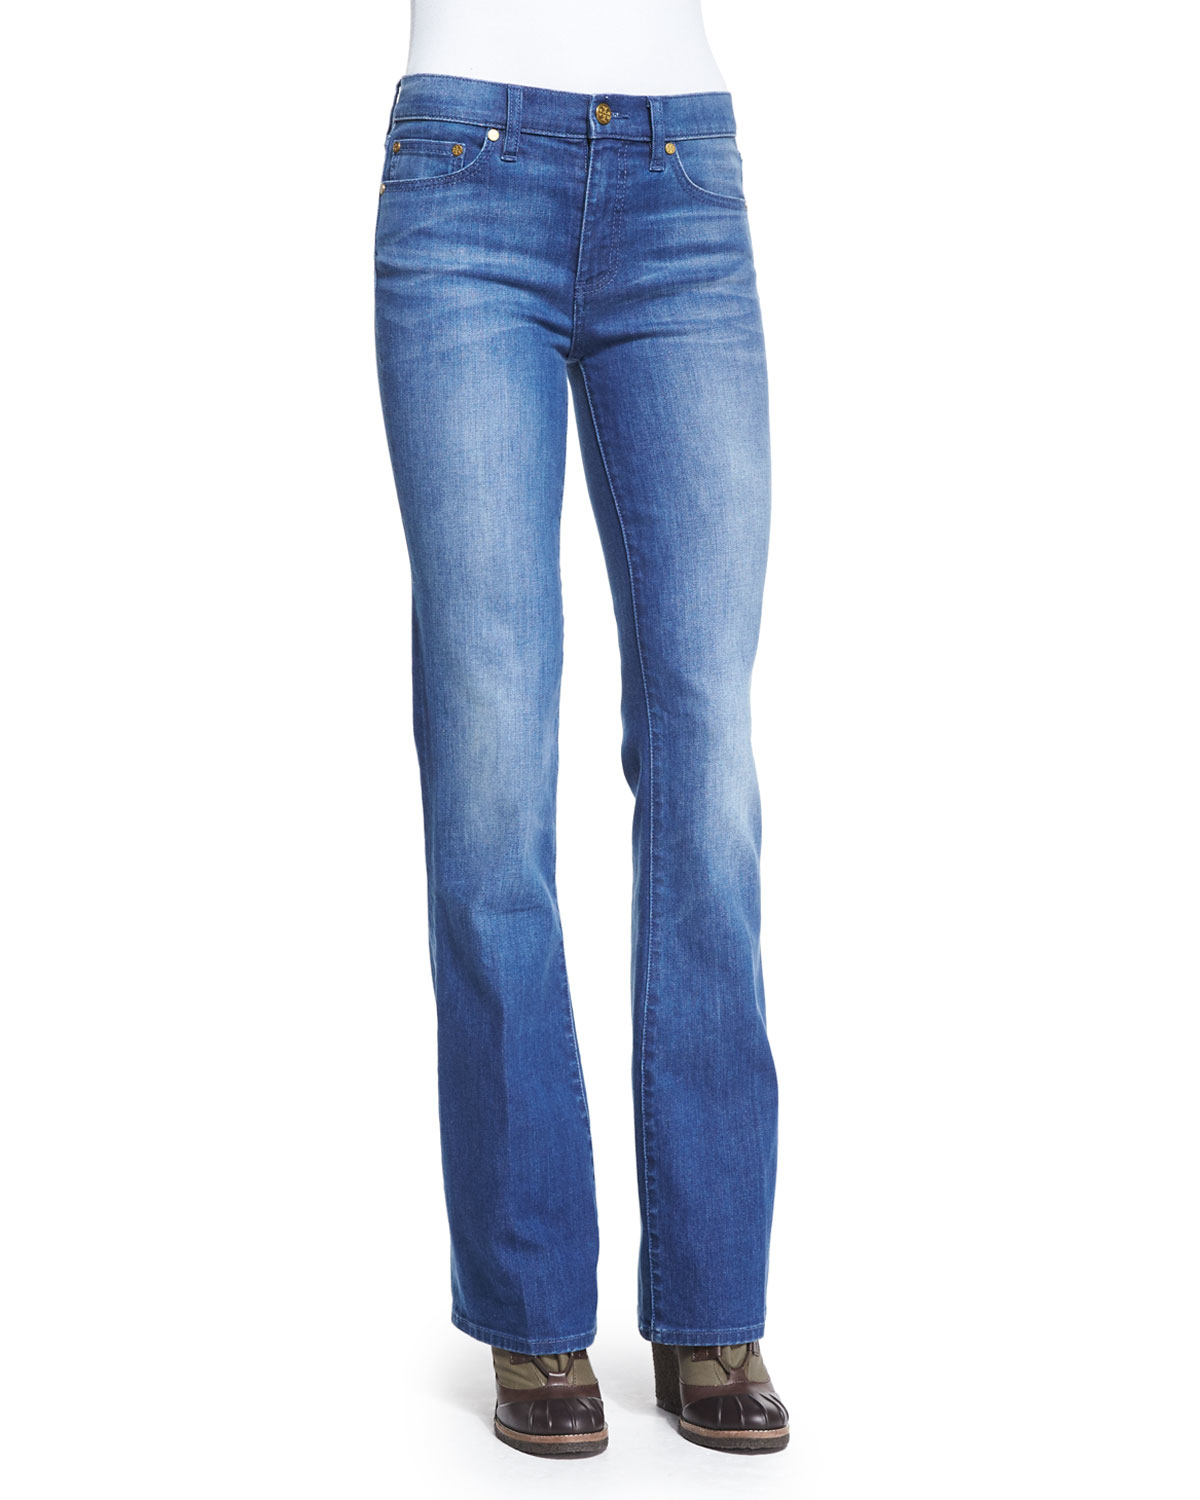 Tory Burch Denim High-waist Flare Jeans in Blue - Lyst